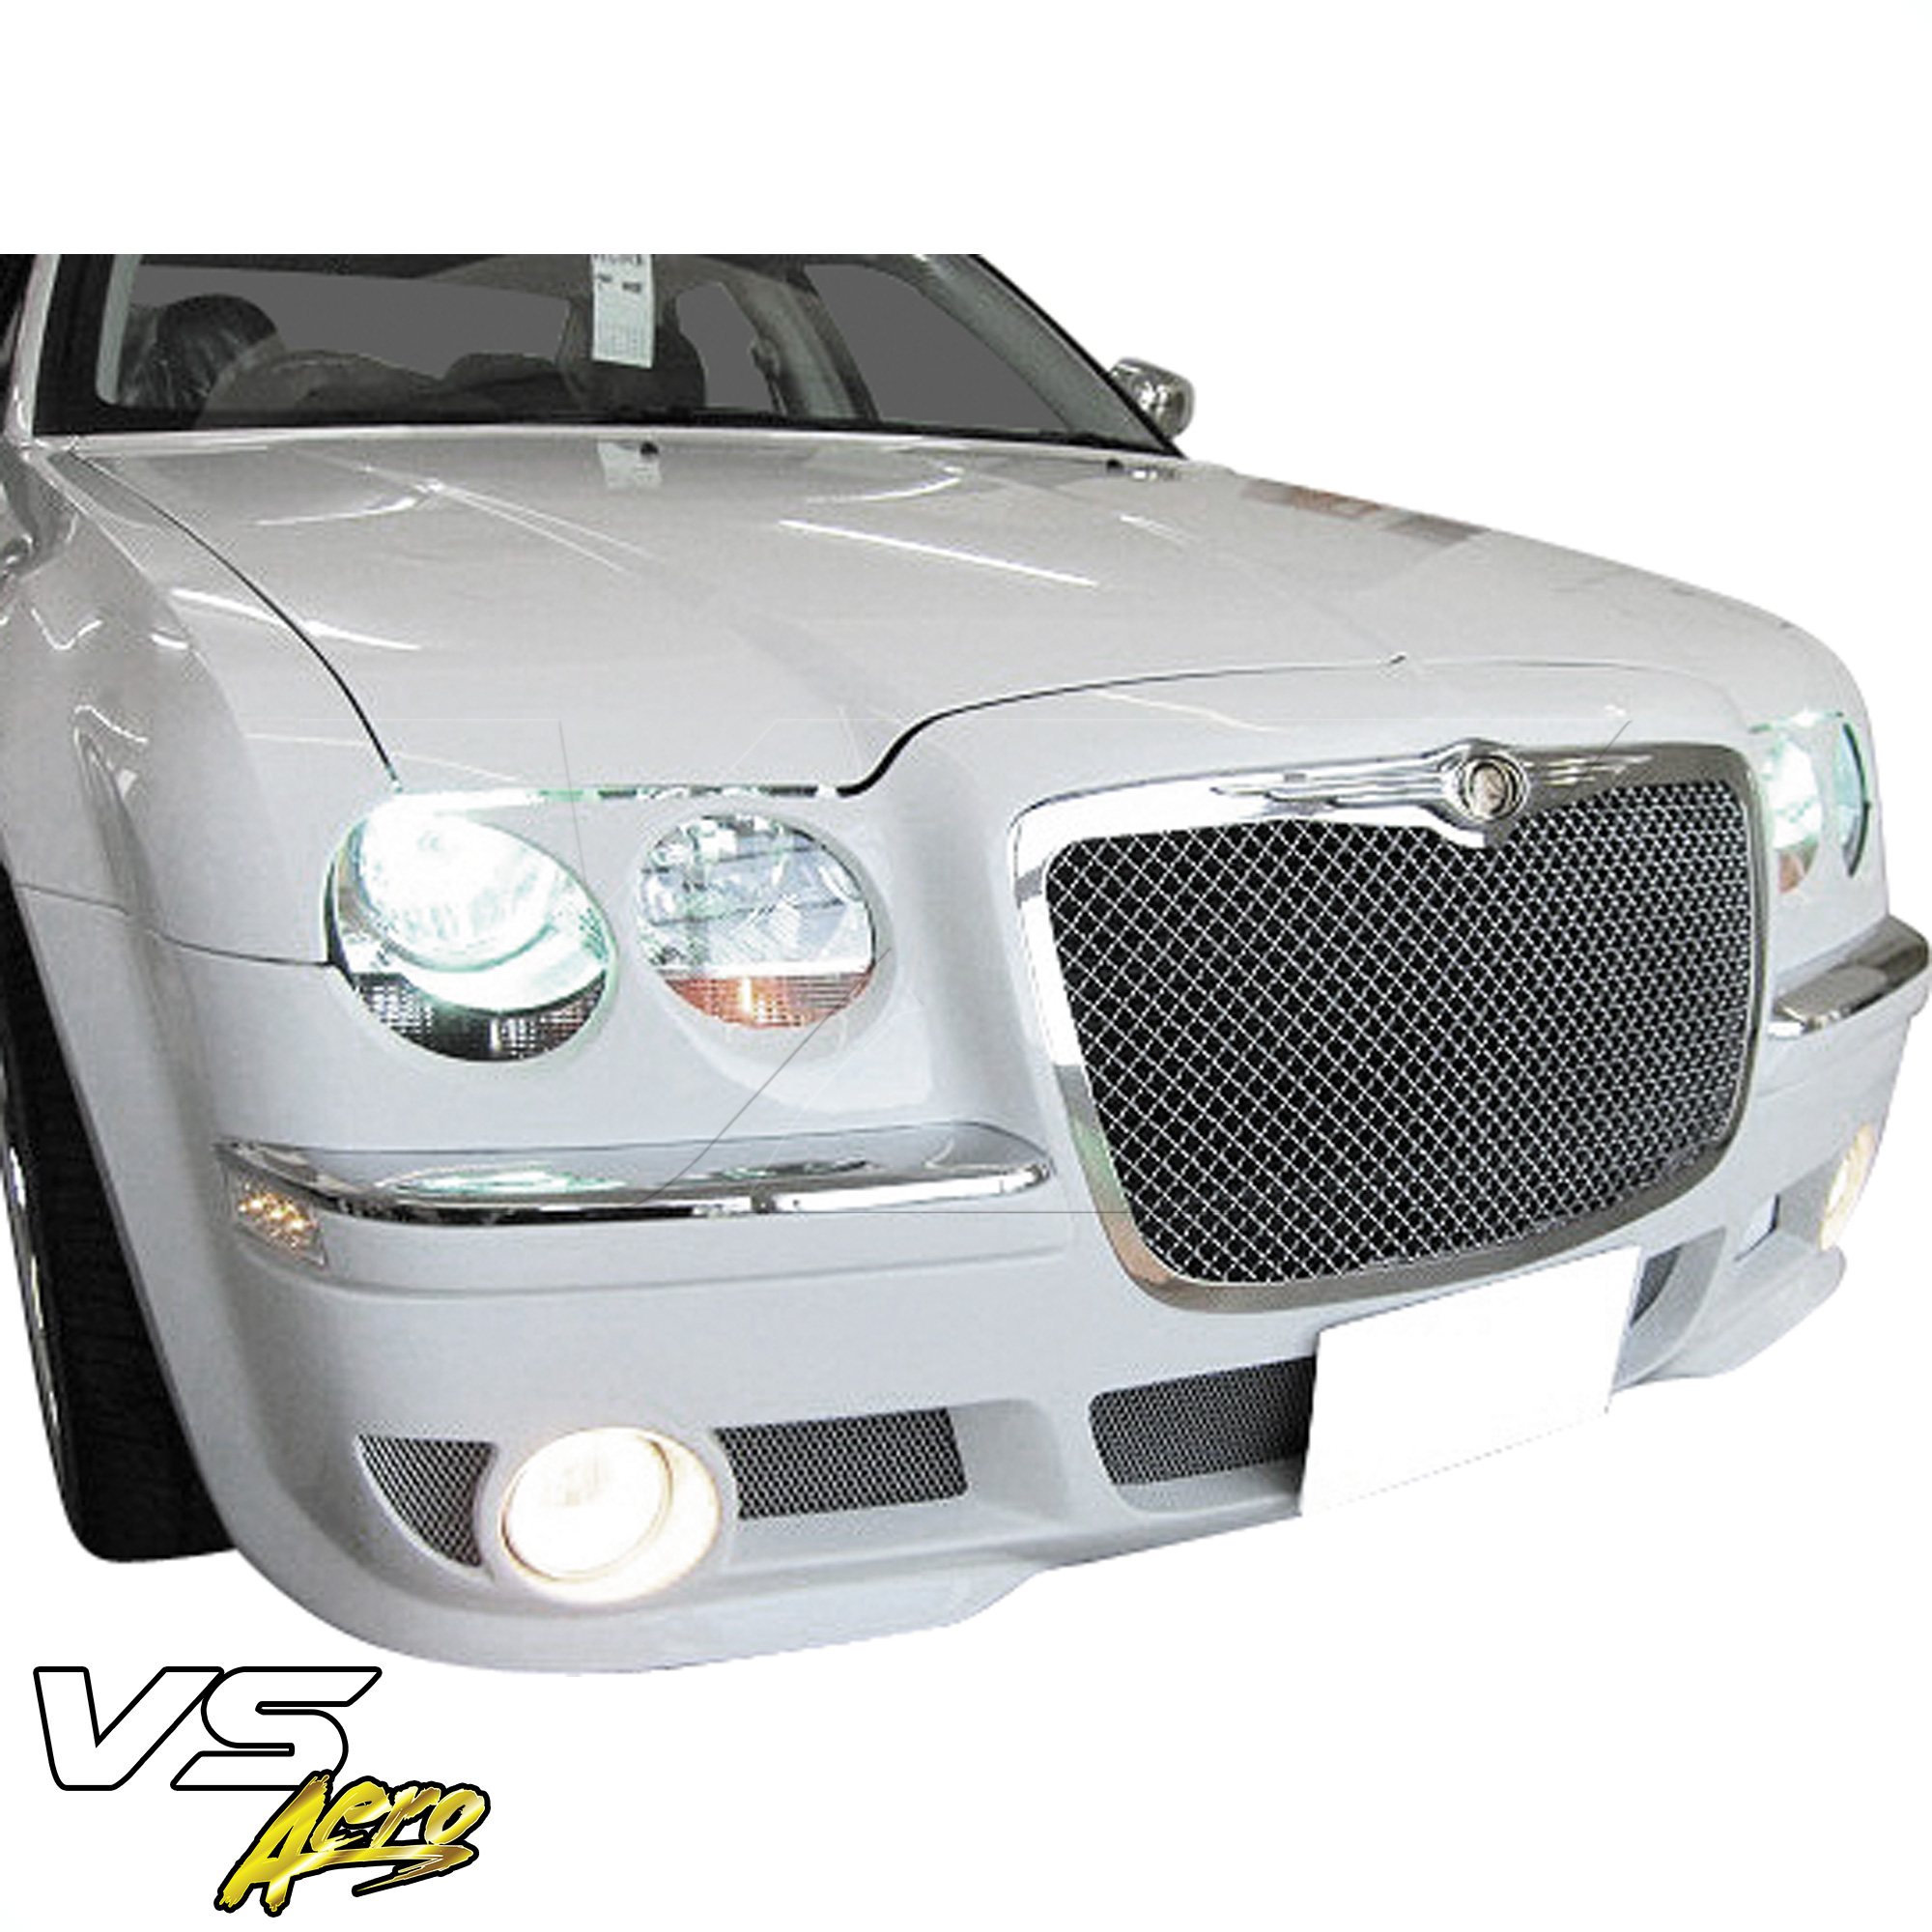 VSaero FRP BOME Front Bumper 1pc > Chrysler 300C 2005-2010 - Image 34